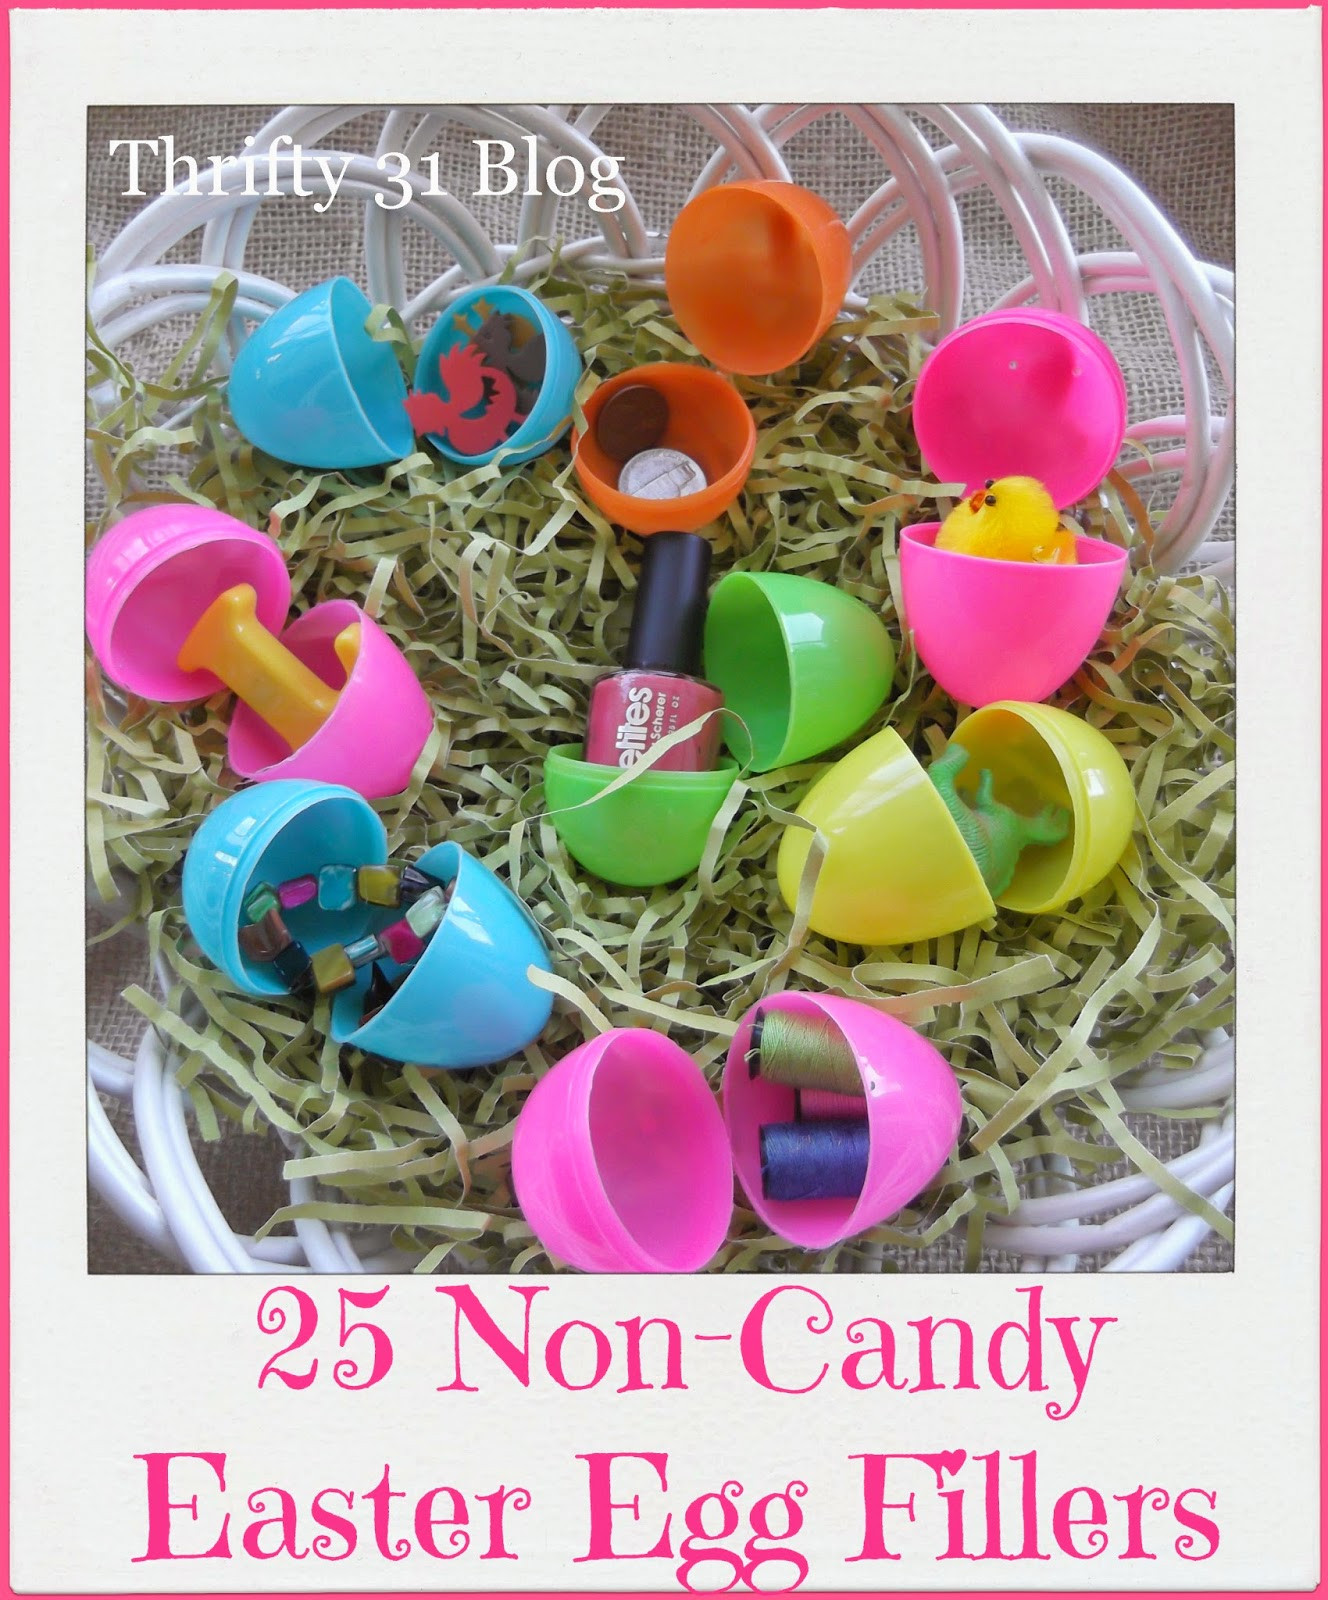 Easter Egg Filler Ideas
 Thrifty 31 Blog 25 Non Candy Easter Egg Fillers